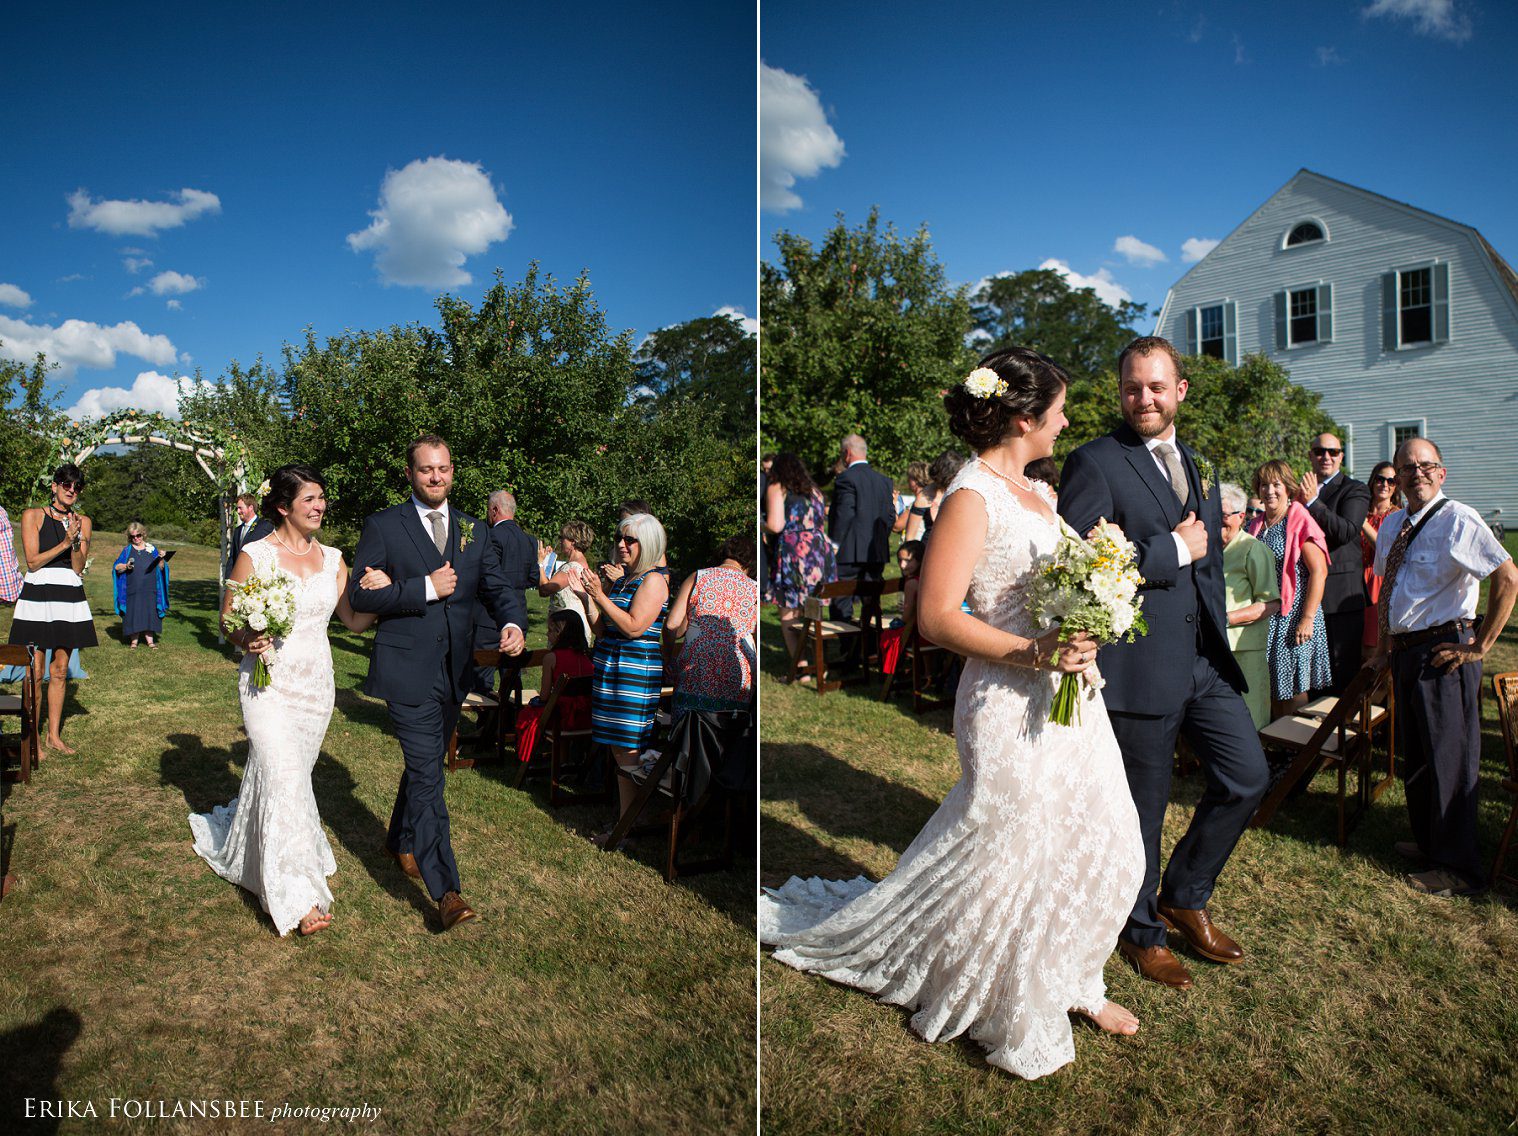 Outdoor summer historic estate wedding in New Hampshire